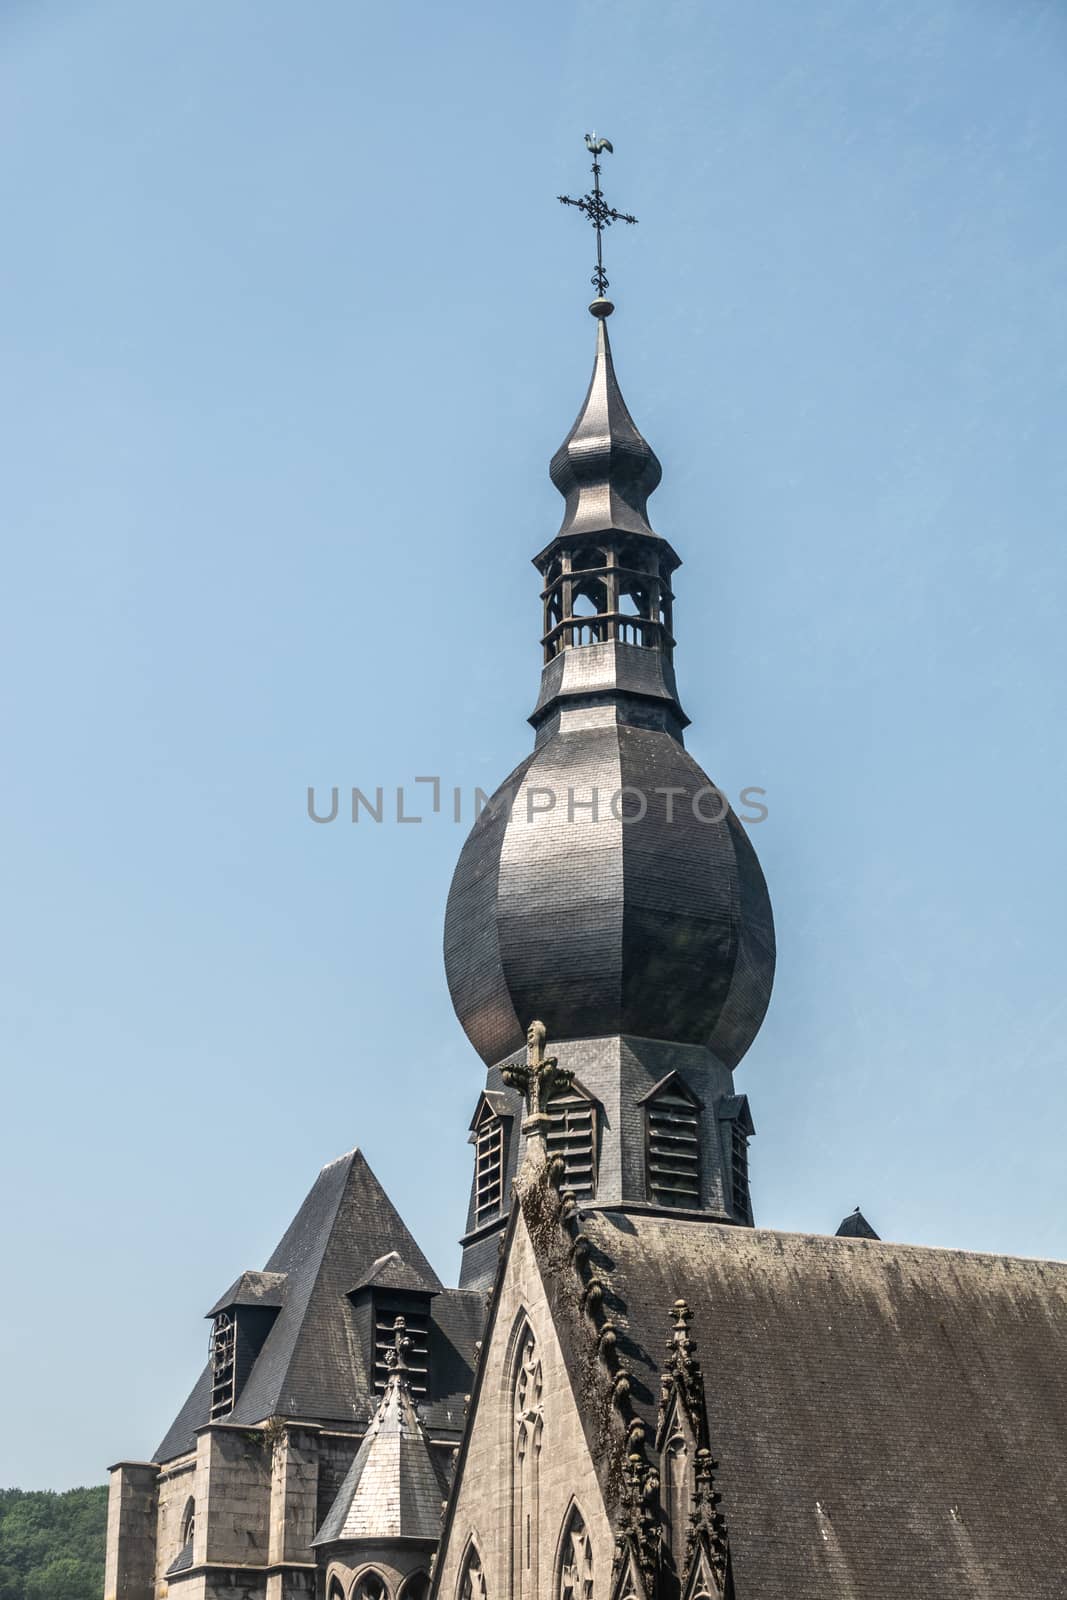 Dinant, Belgium - June 26, 2019: Black wiht shine Top of spire of Notre Dame Church against blue sky.